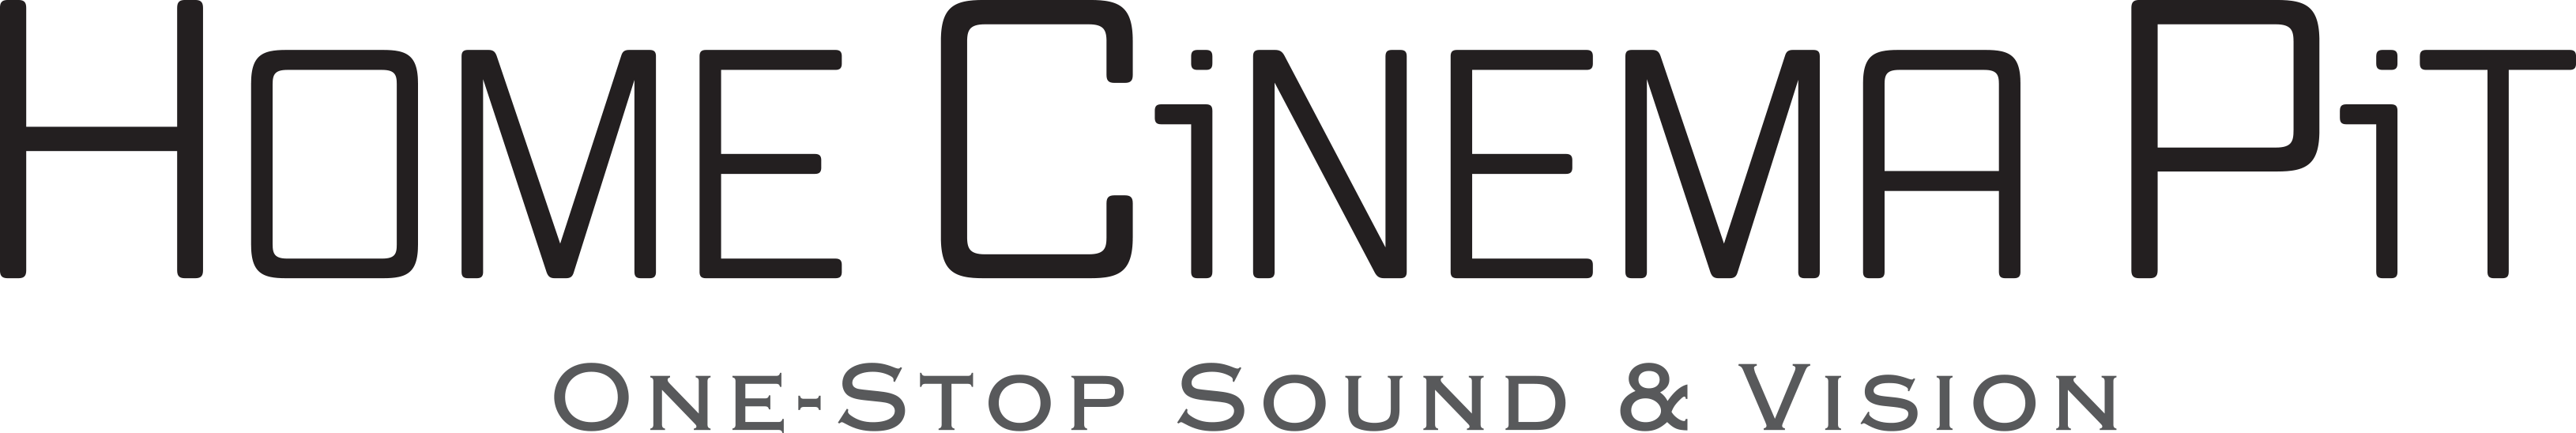 Home Cinema Pit Logo Original ol 1